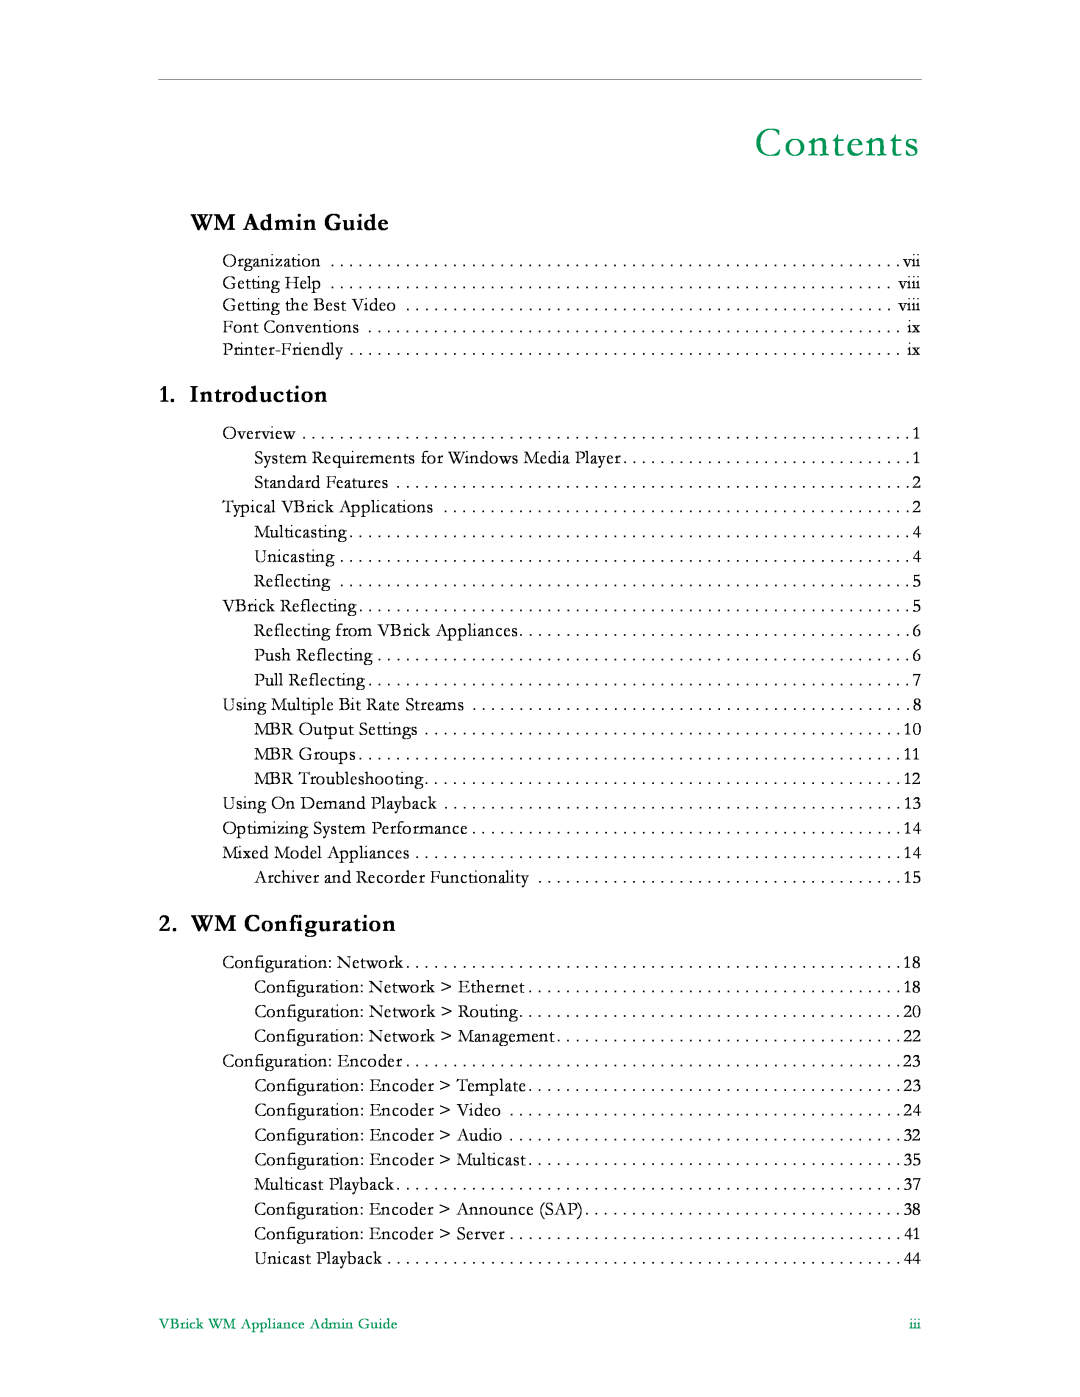 VBrick Systems VB6000, VB4000, VB5000 manual Contents, WM Admin Guide, Introduction, WM Configuration 